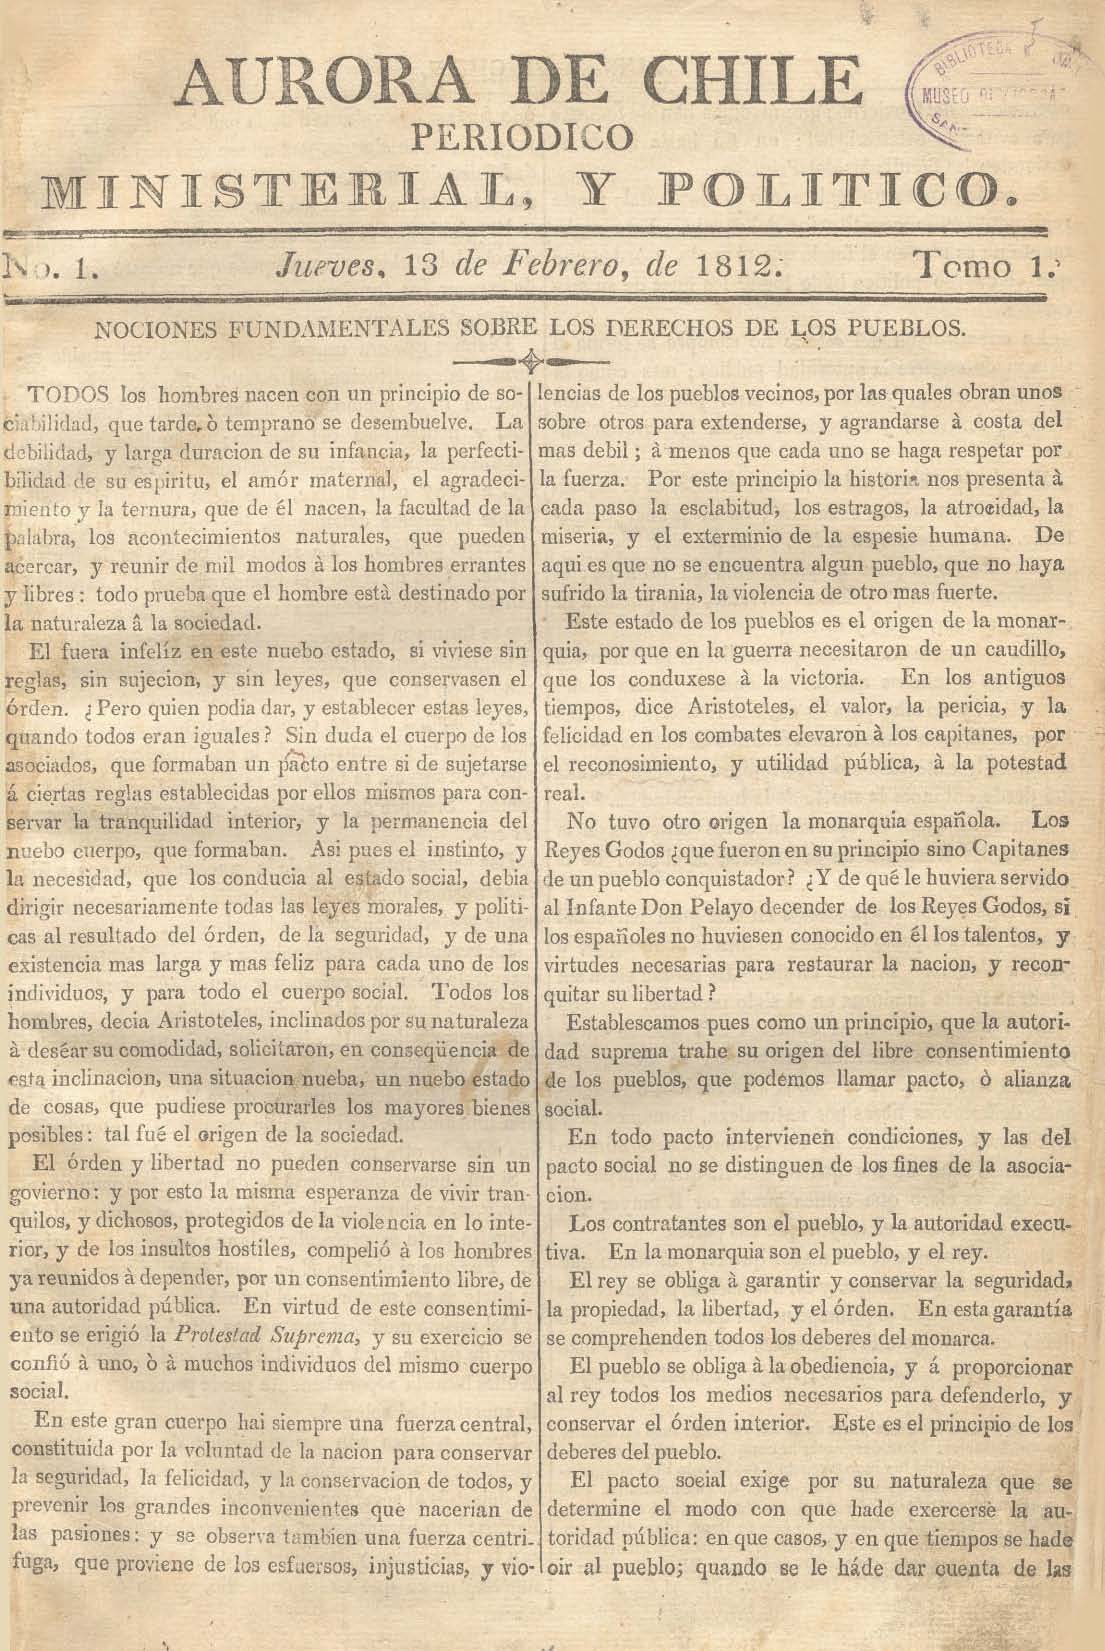 							Ver Núm. 2 (1812): Tomo I. Jueves 20 de Febrero
						